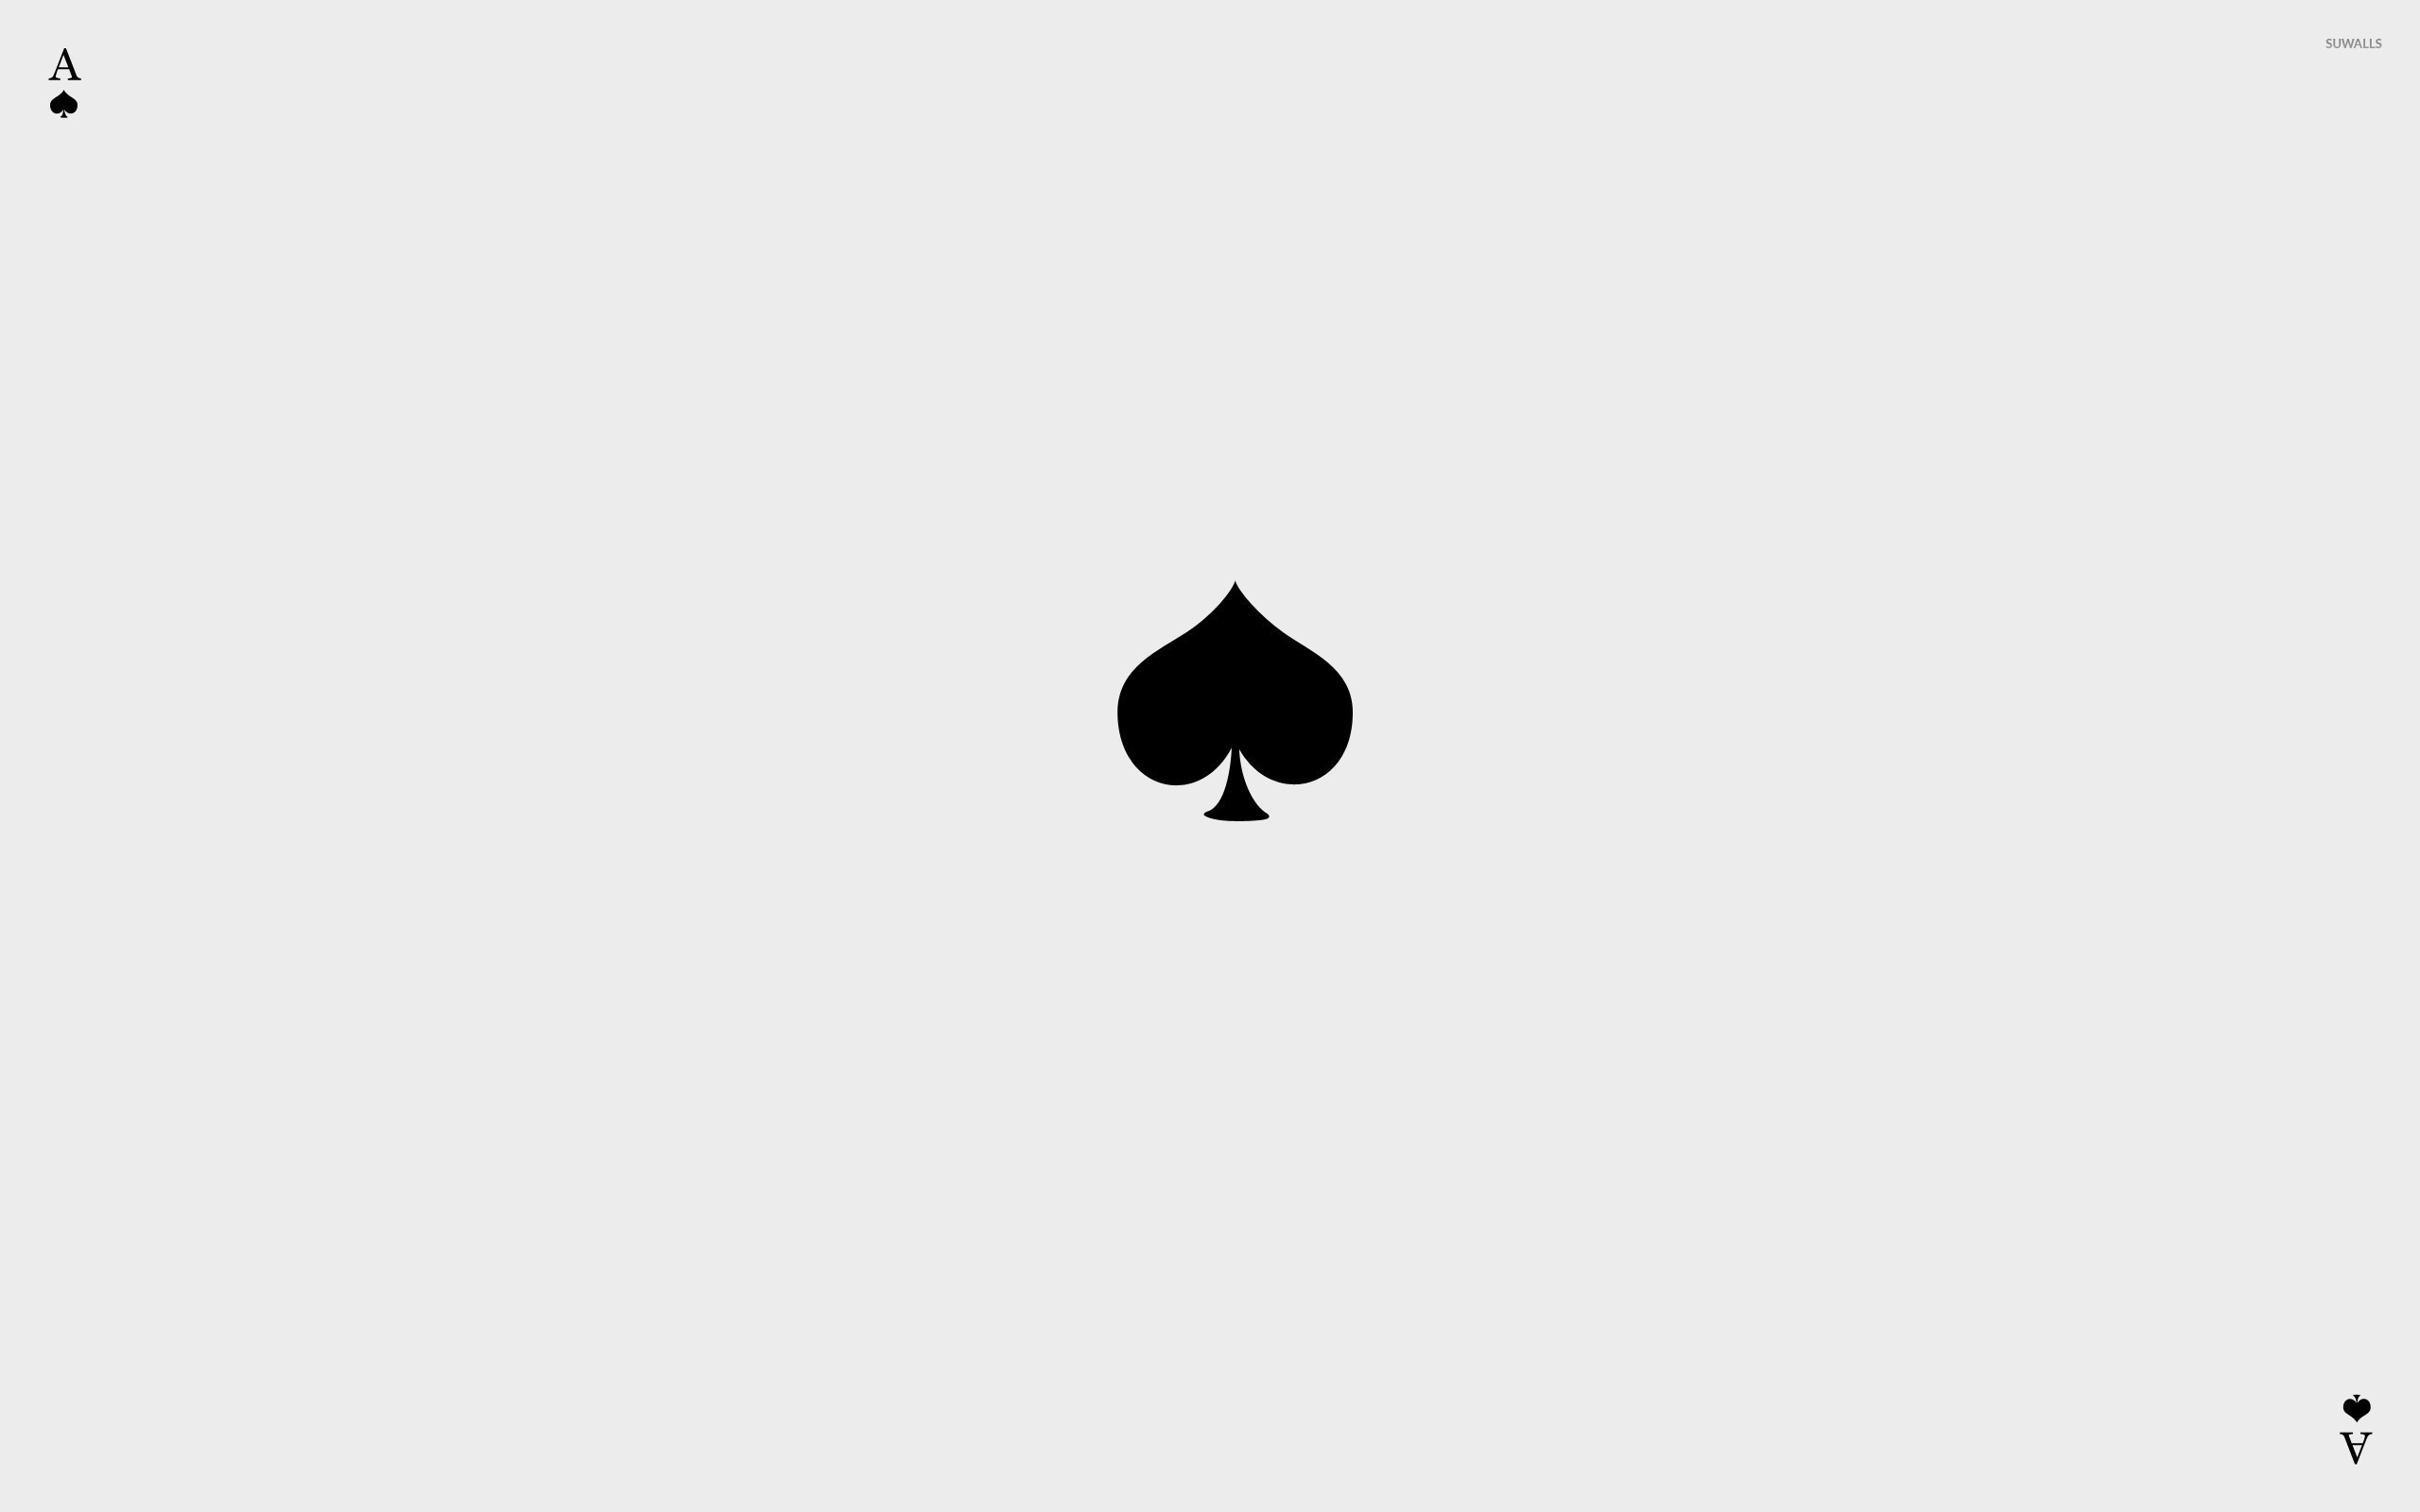 2560x1600 Ace of spades wallpaper